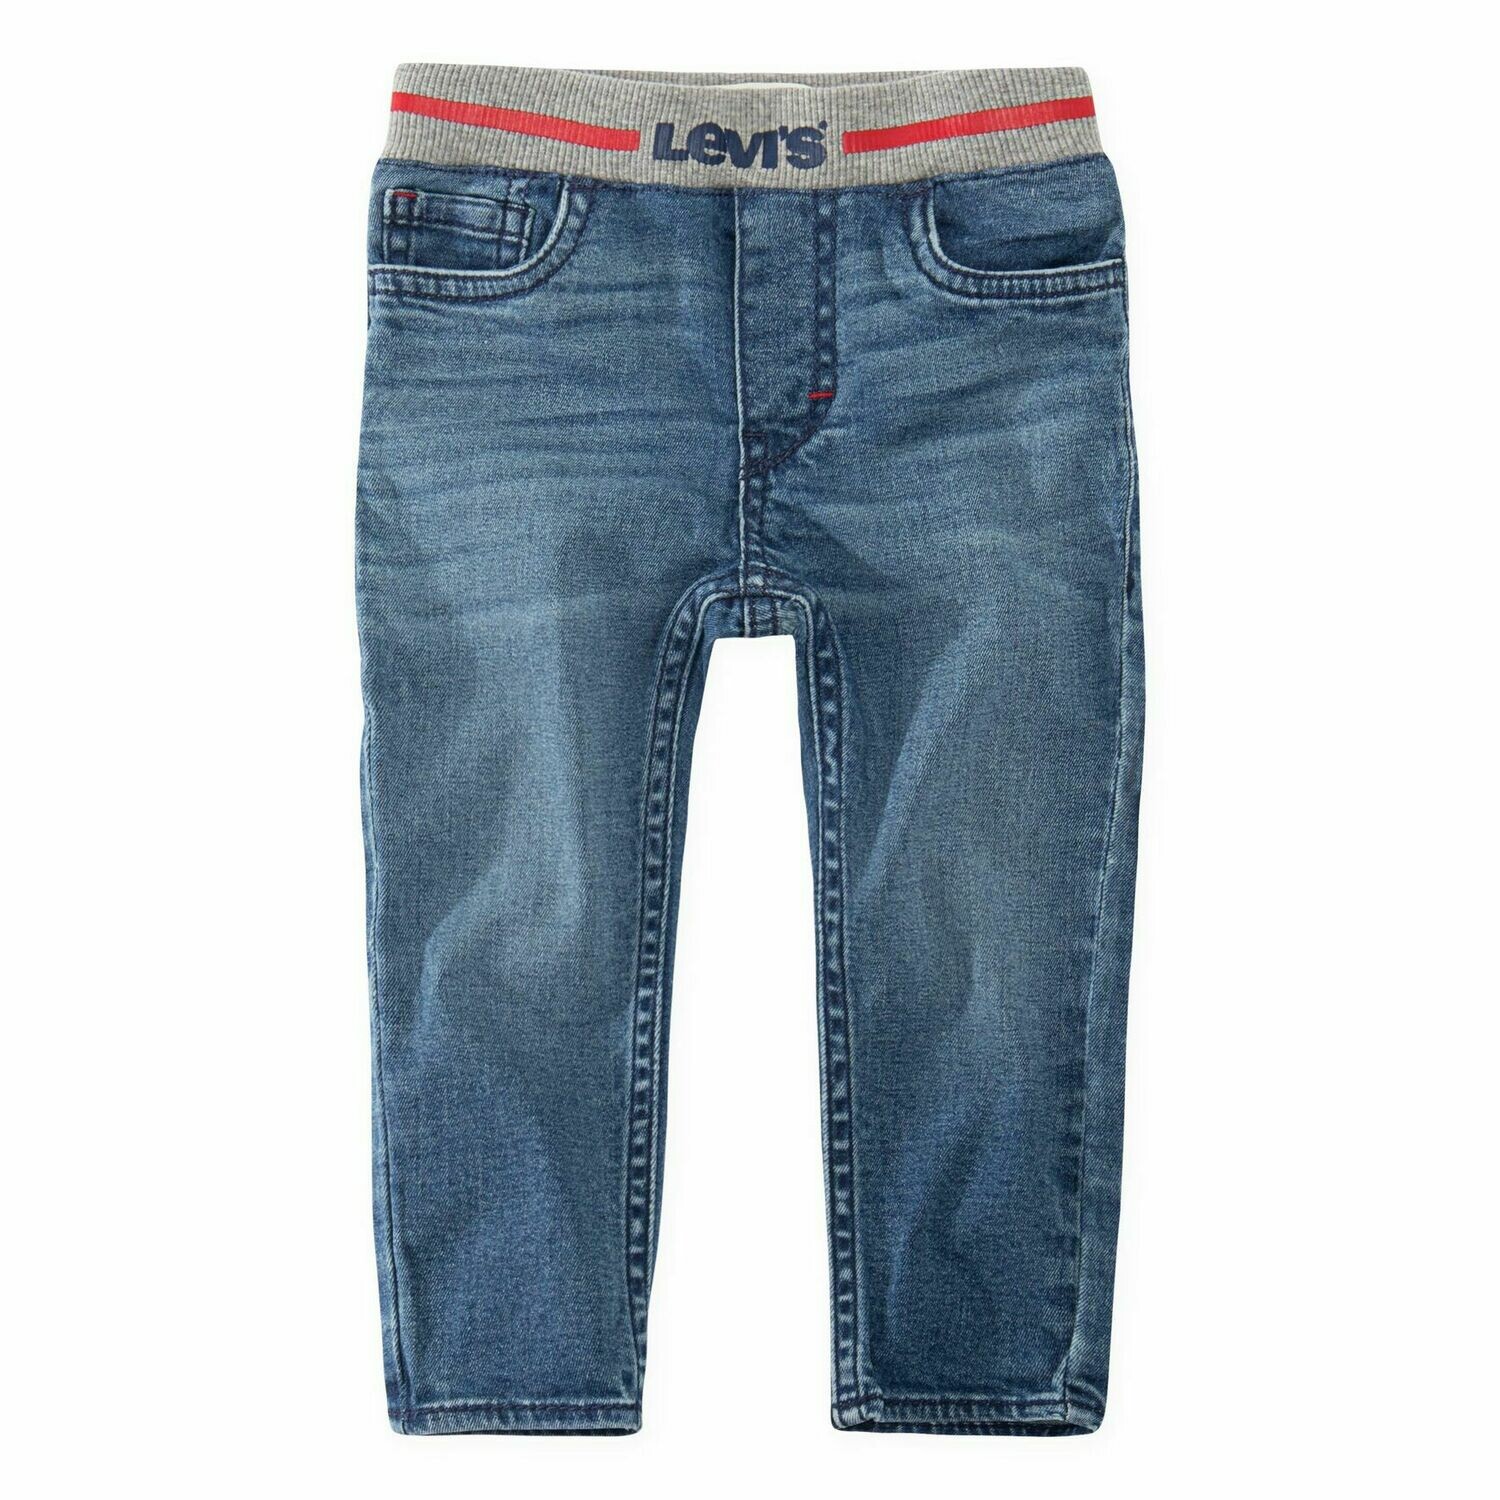 Levis 510 Skinny Jeans